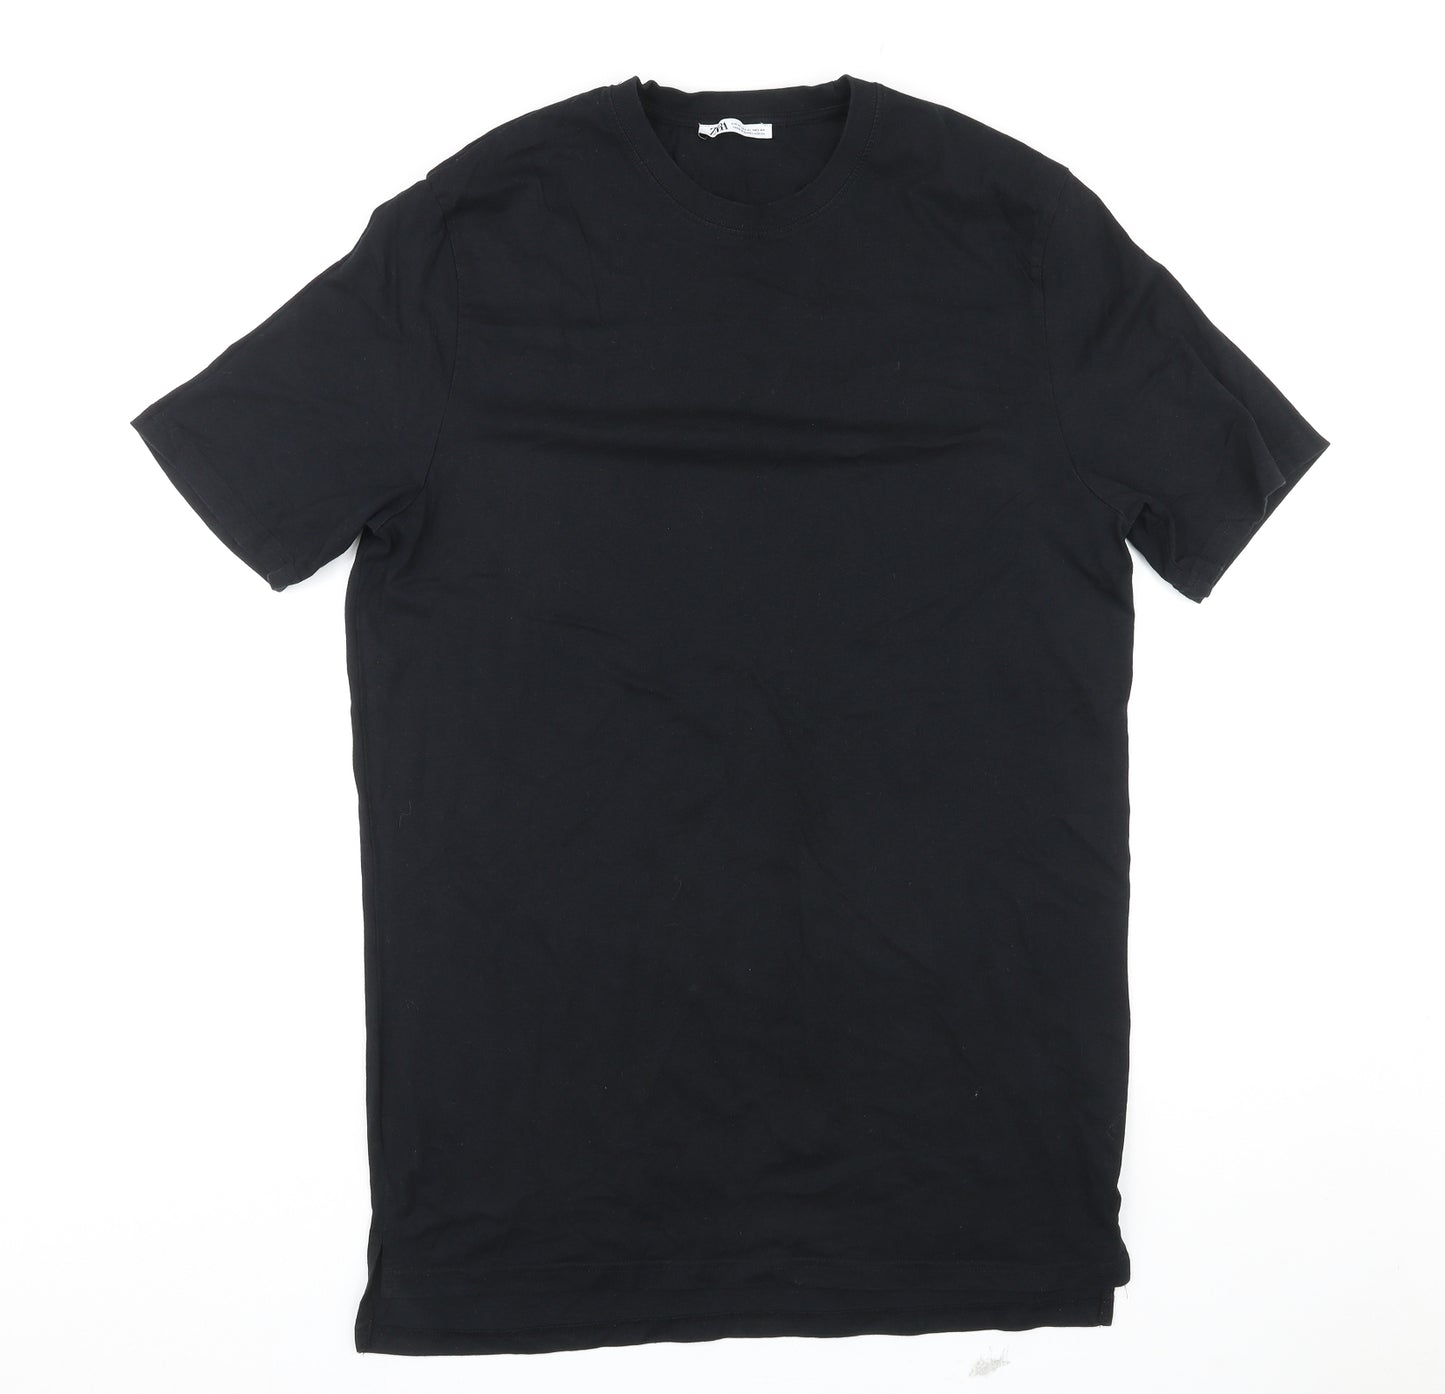 Zara Mens Black Cotton T-Shirt Size XL Crew Neck